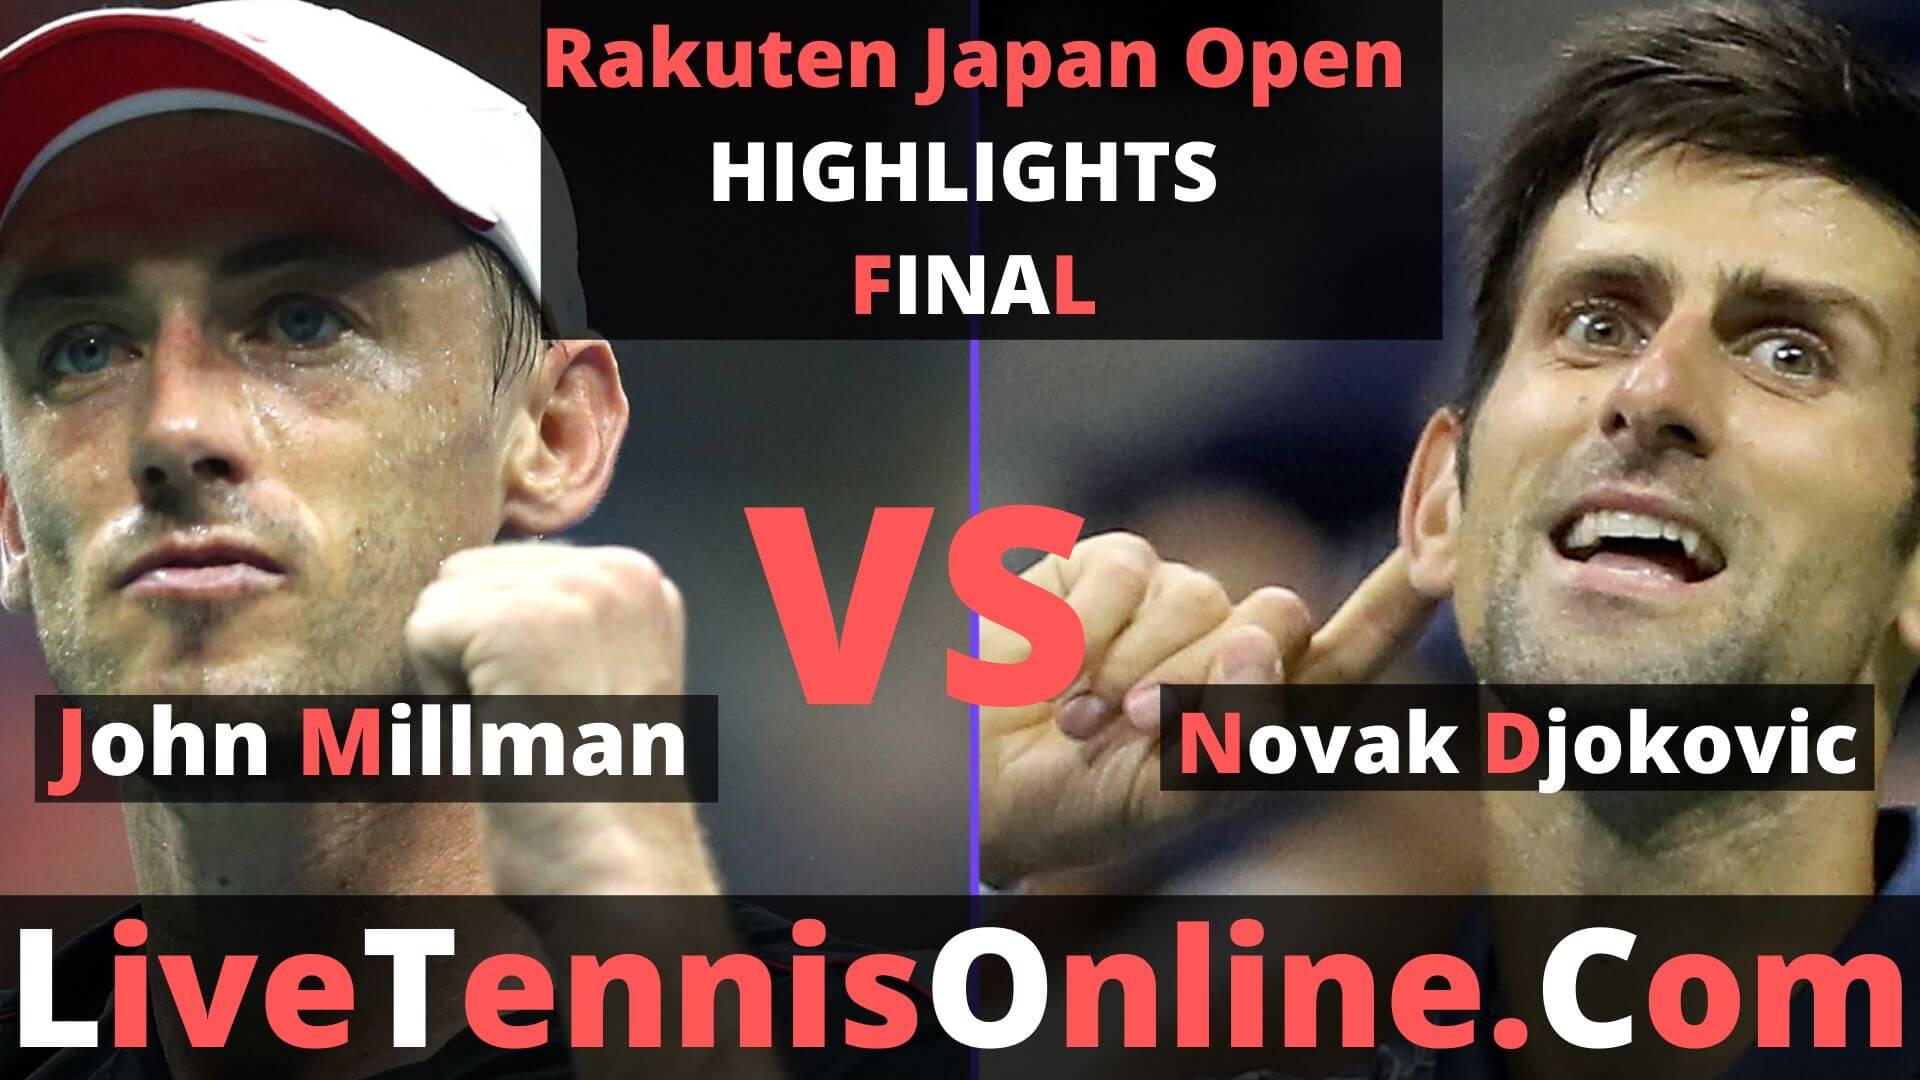 Novak Djokovic Vs John Millman Highlights 2019 Rakuten Japan Open Final